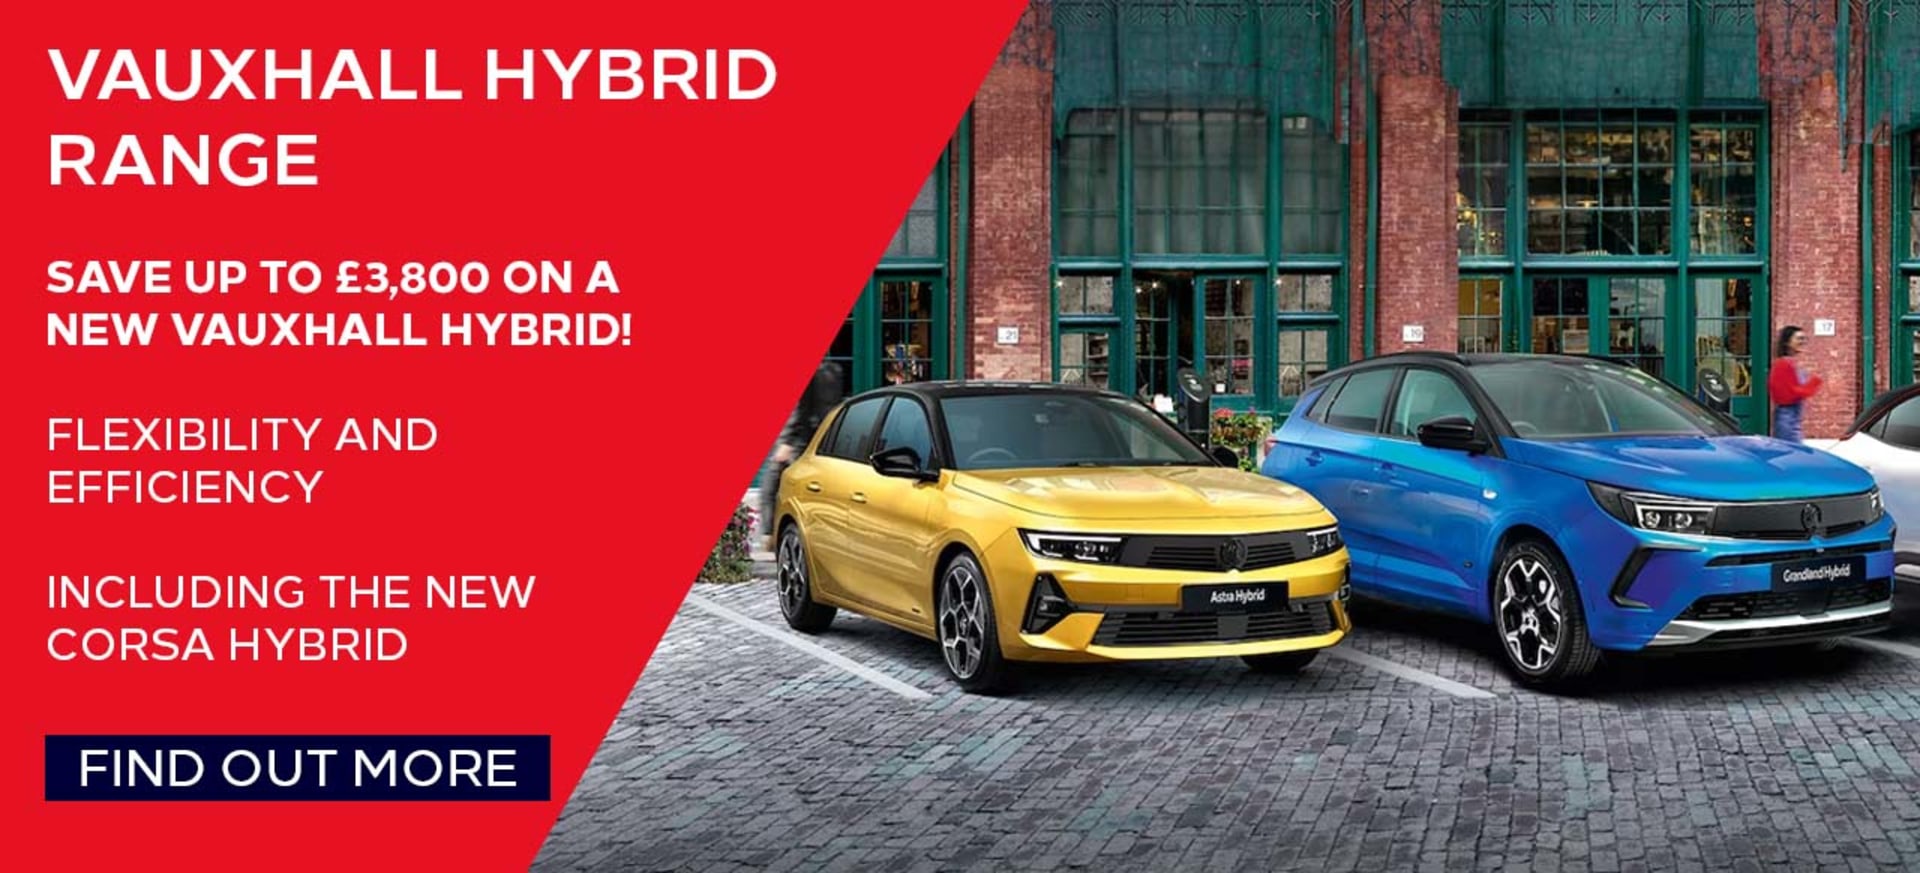 Vauxhall Hybrid Offers